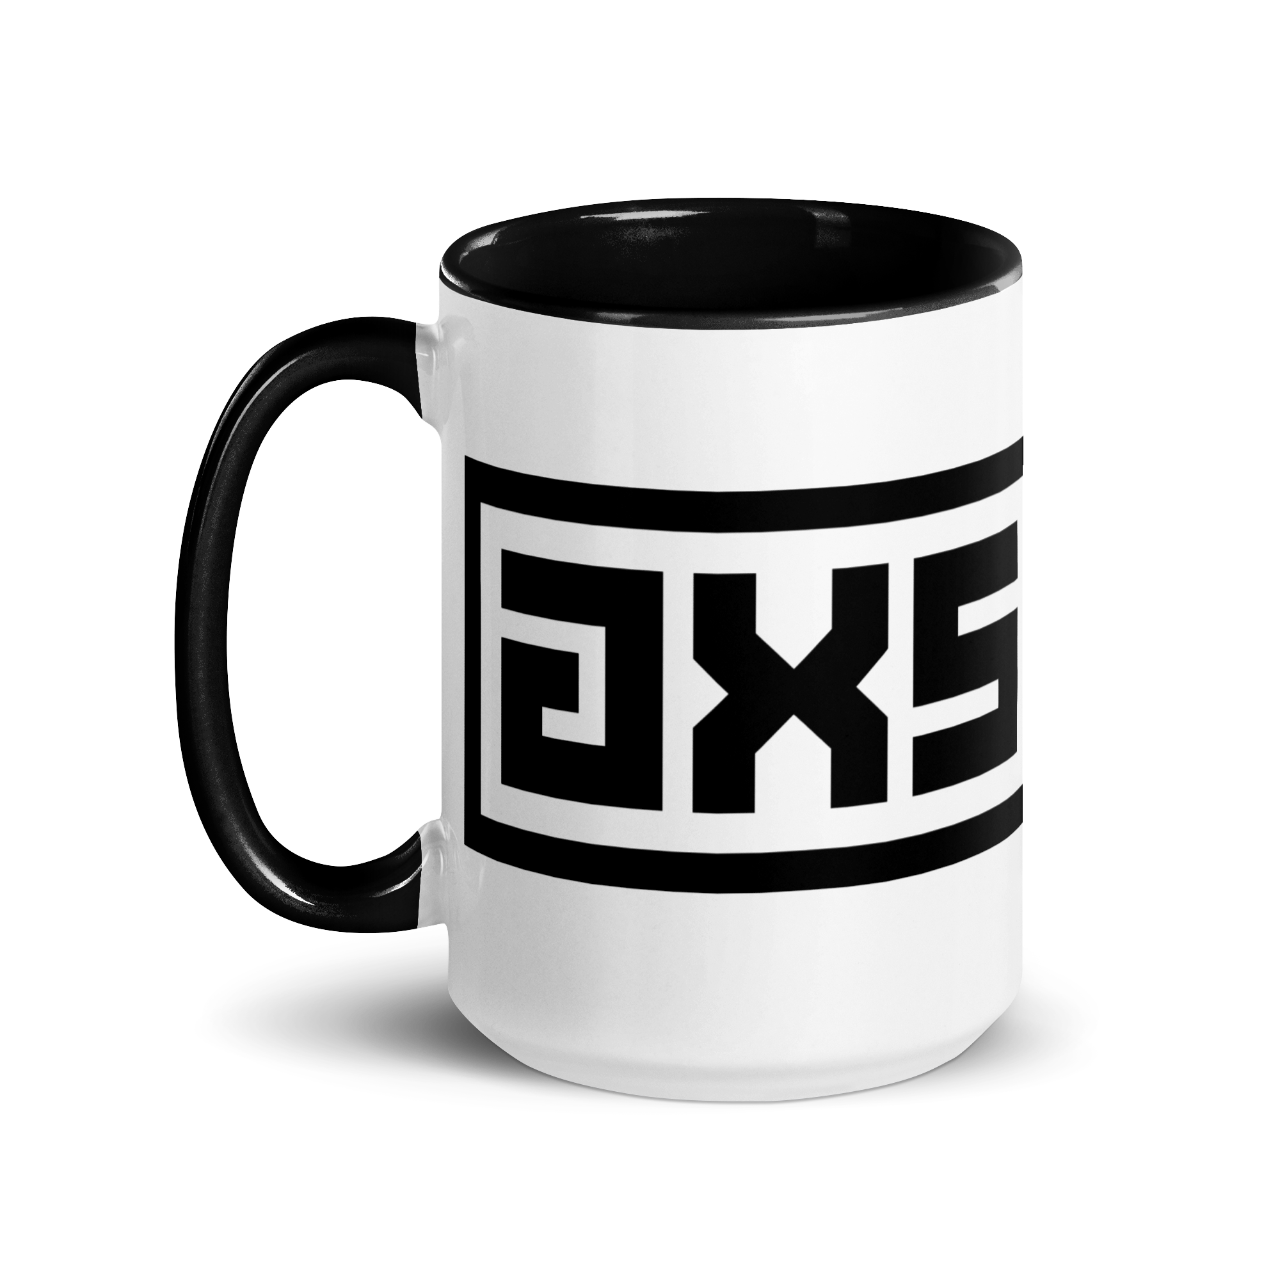 axsgtr axess electronics guitar music industry branded merchandise swag black white ceramic coffee mug 15oz